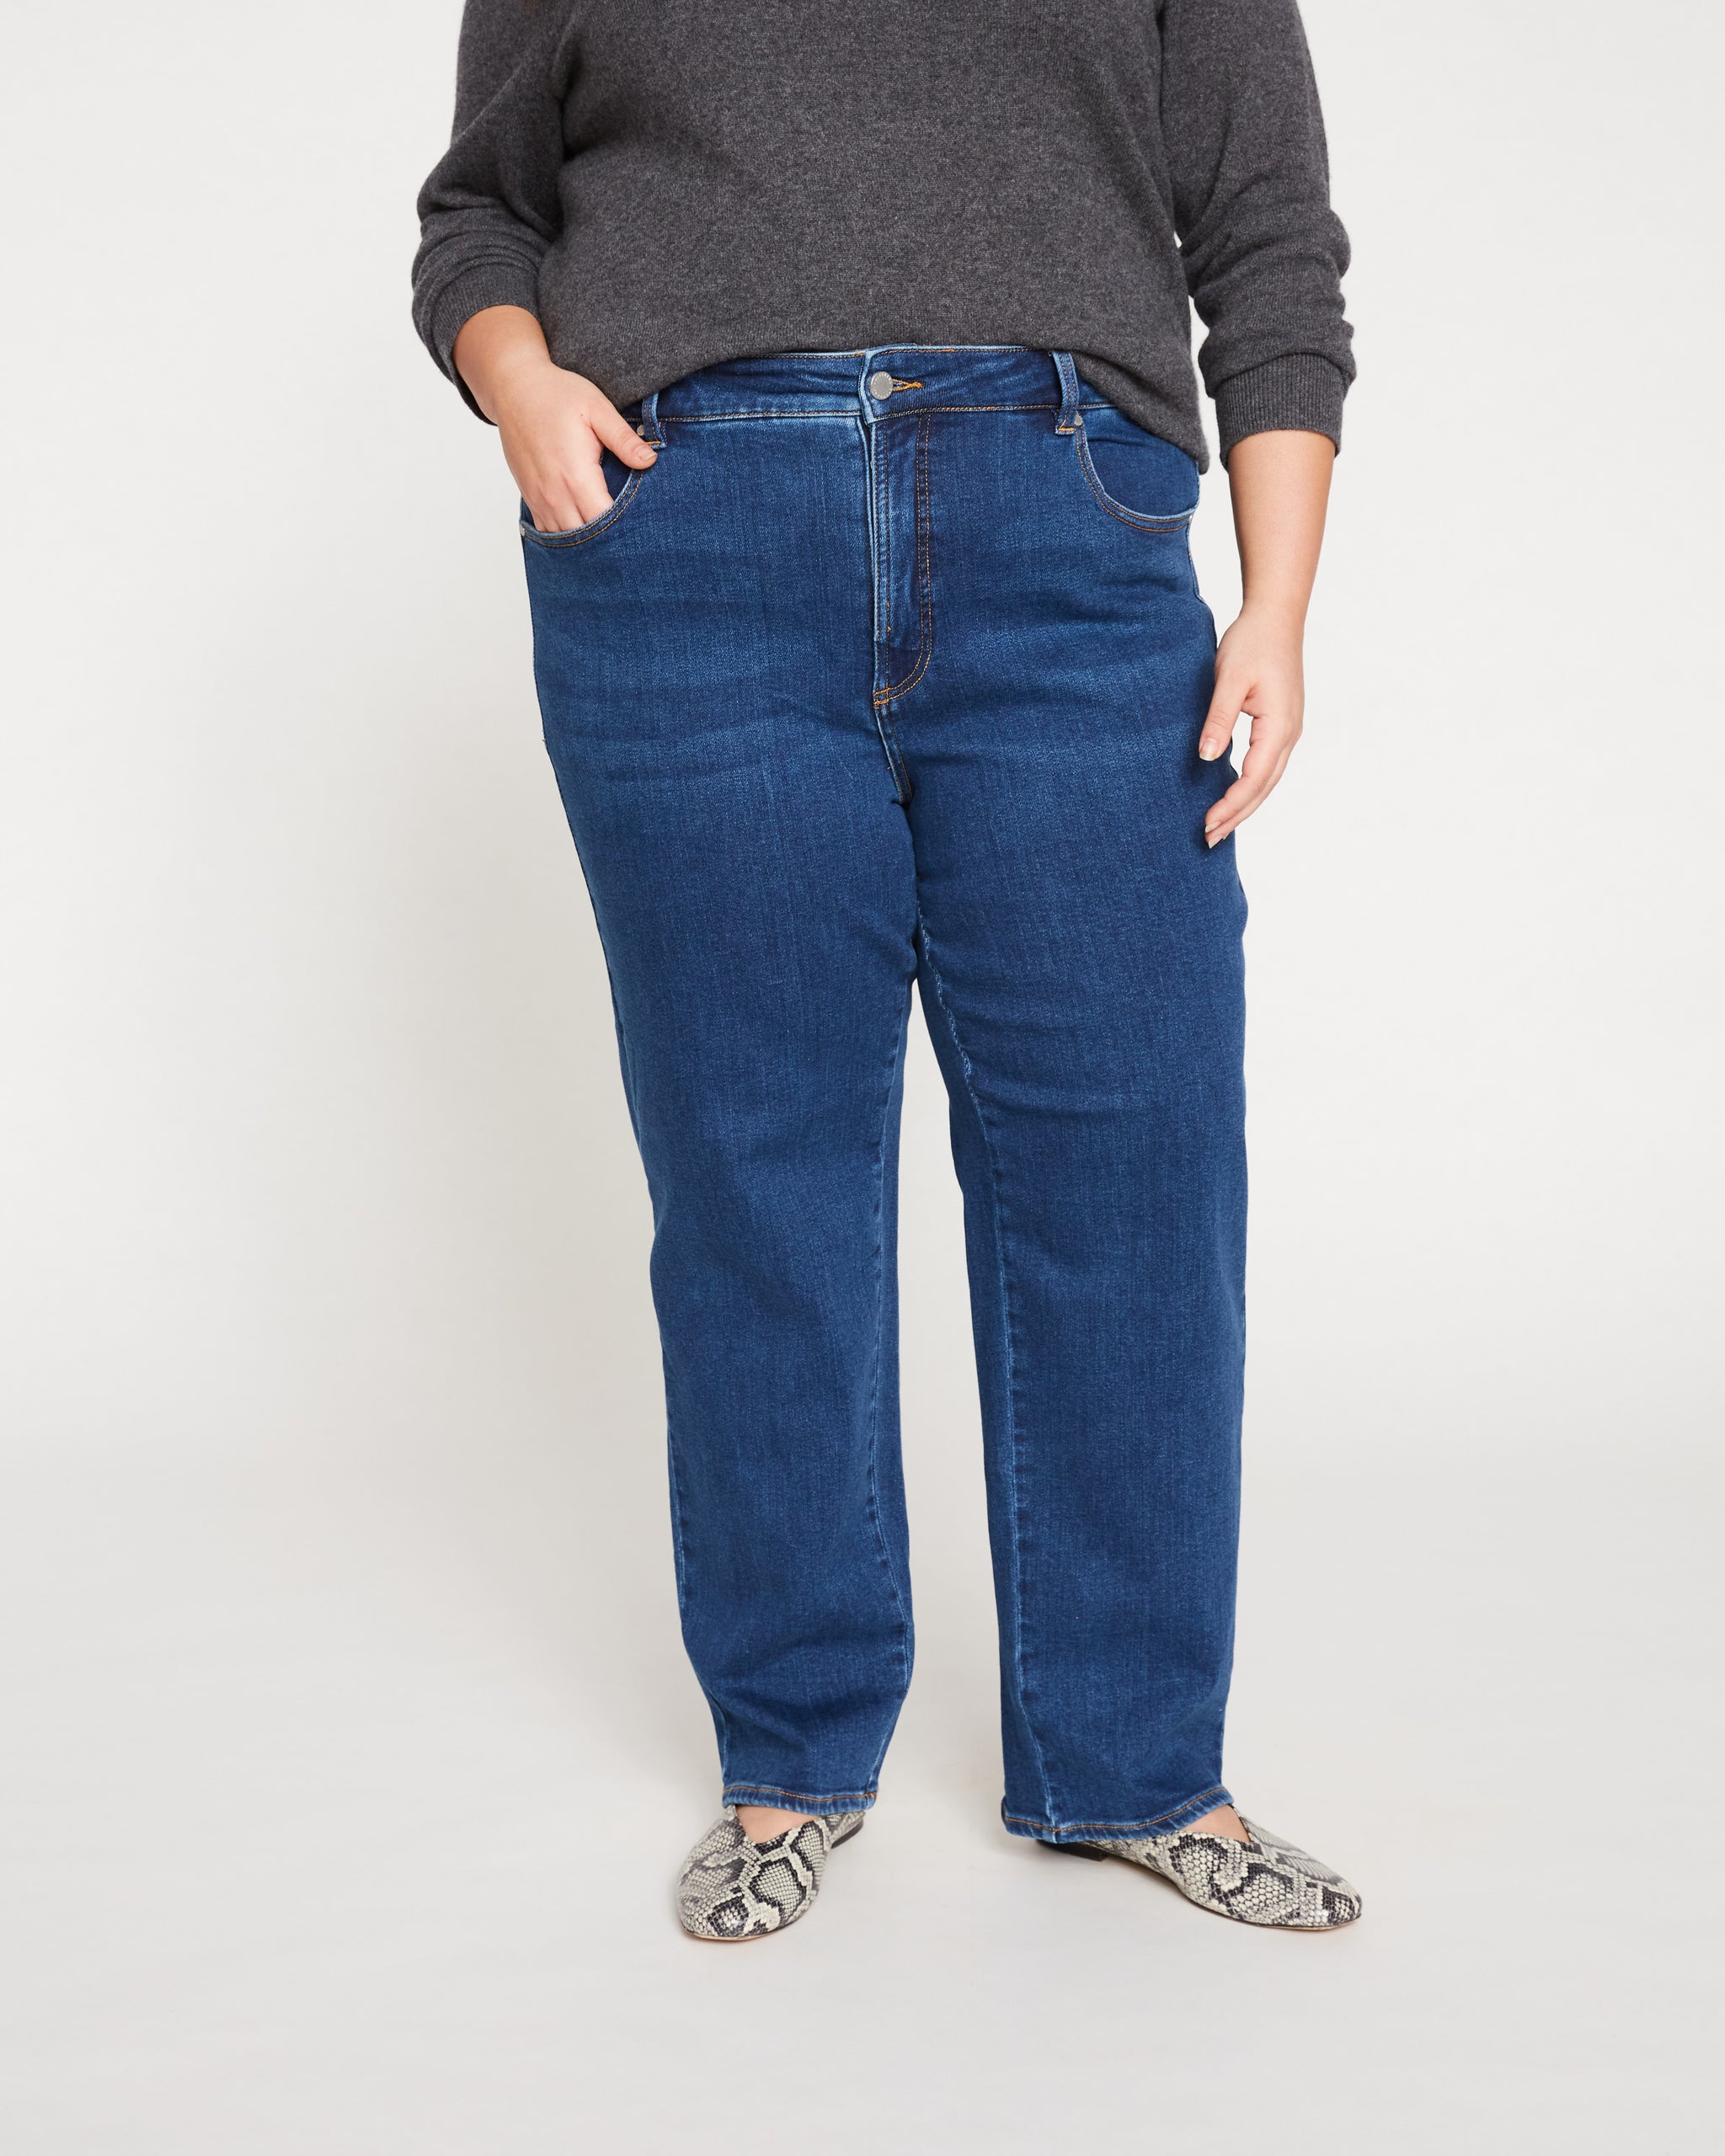 Etta High Rise Straight Leg Jeans 31 Inch - Aged Indigo